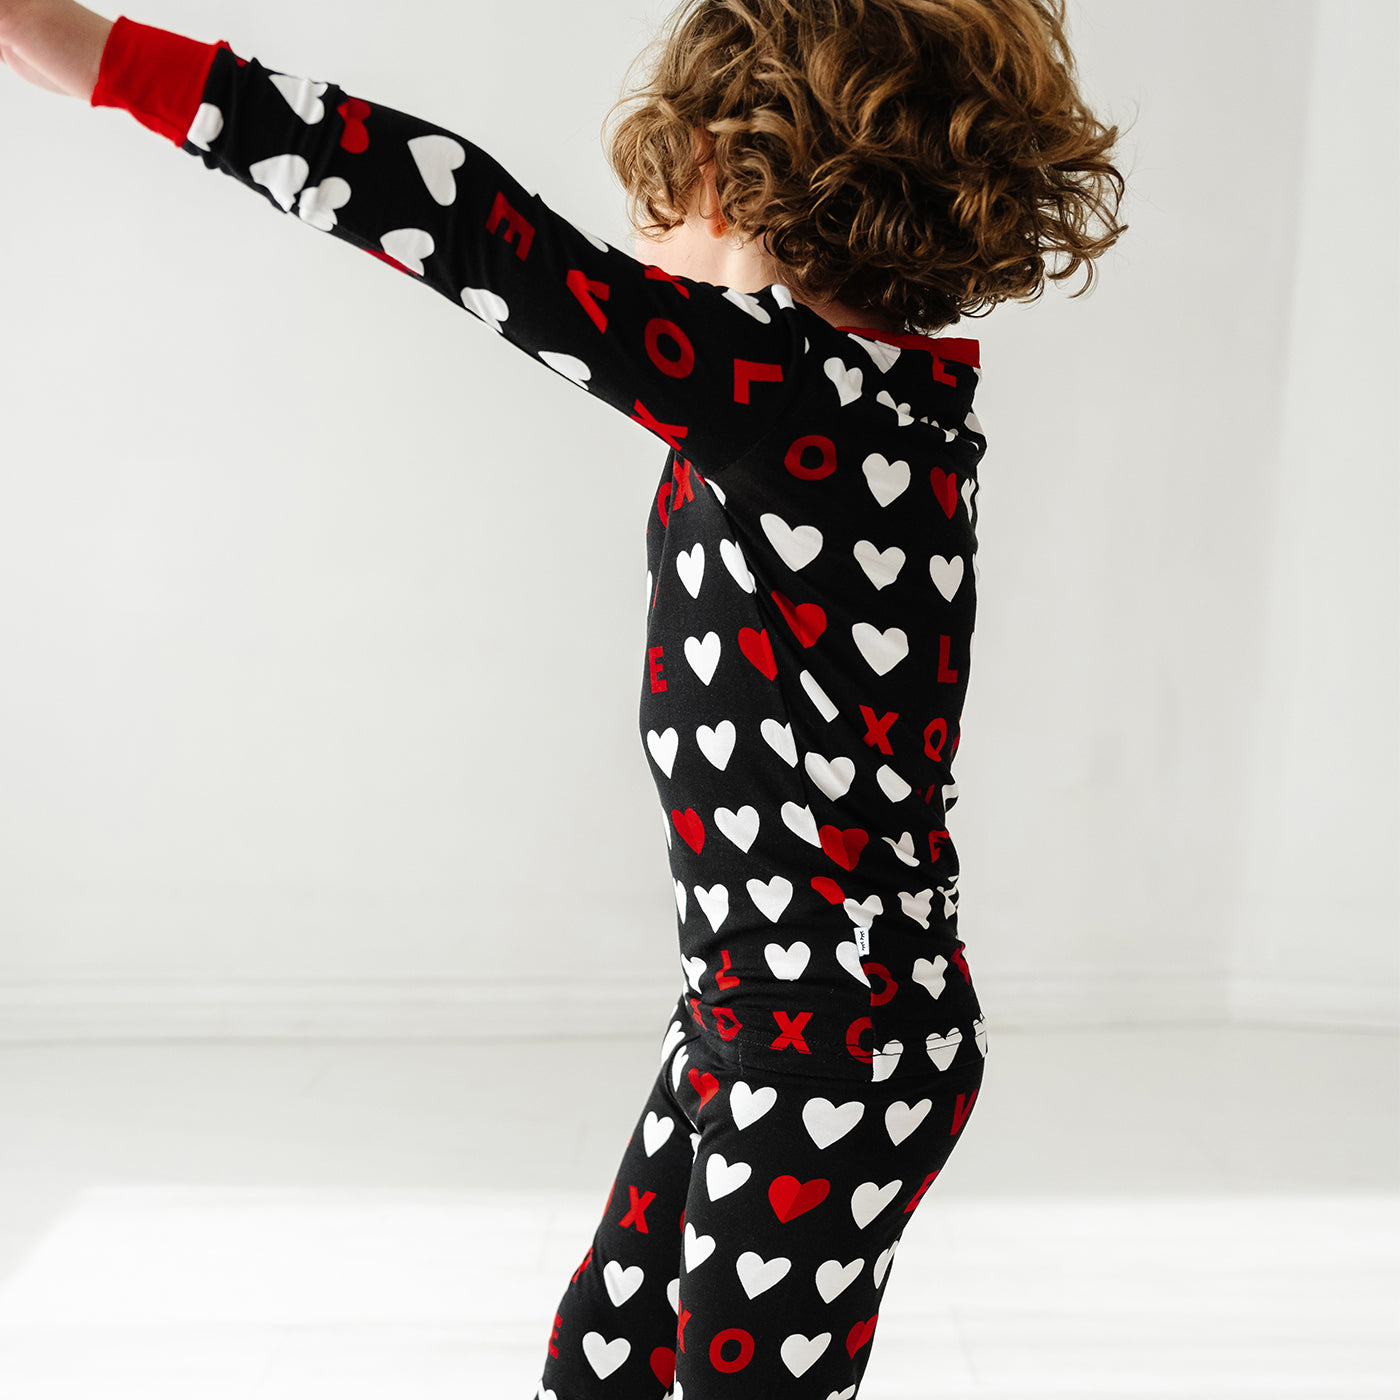 Child twirling wearing Black XOXO two piece pajama set